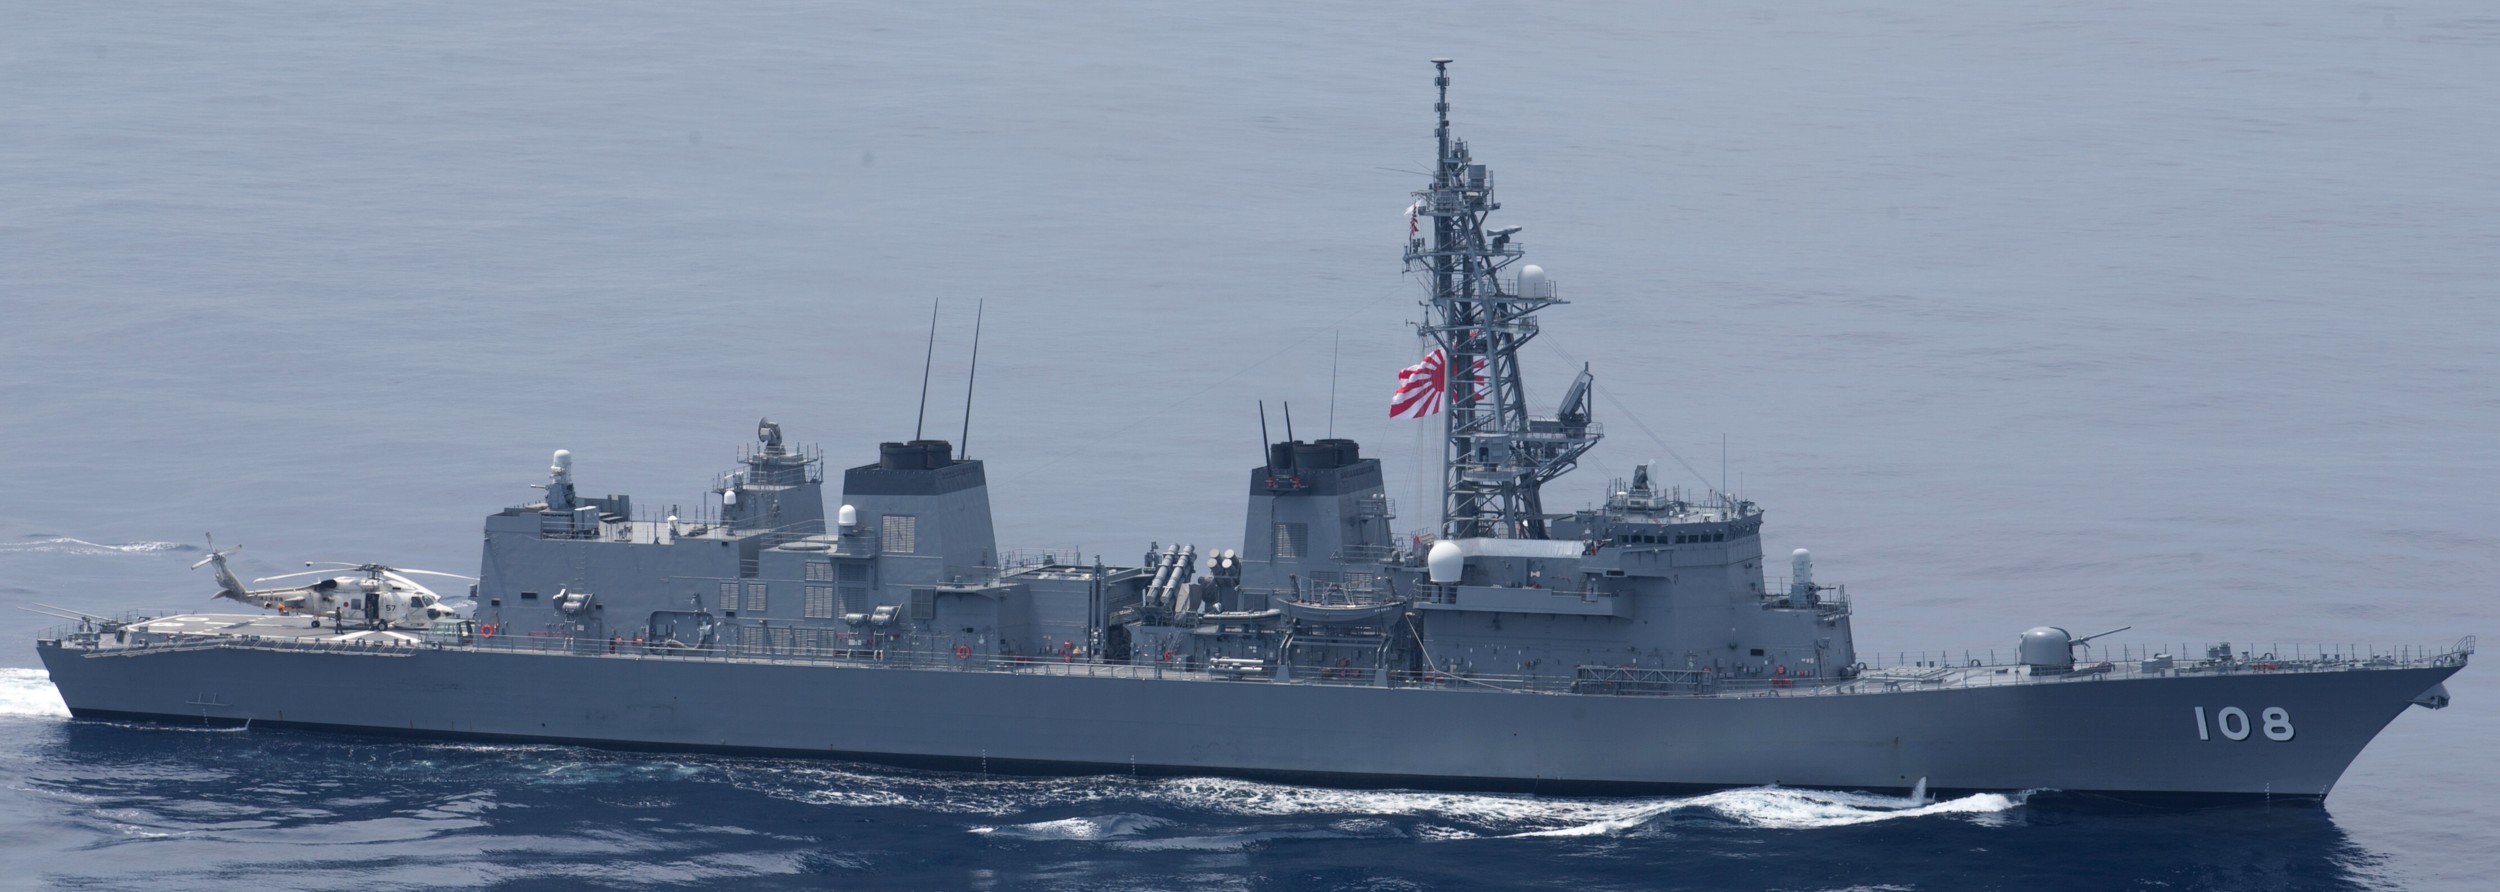 dd-108 js akebono murasame class destroyer japan maritime self defense force jmsdf 24